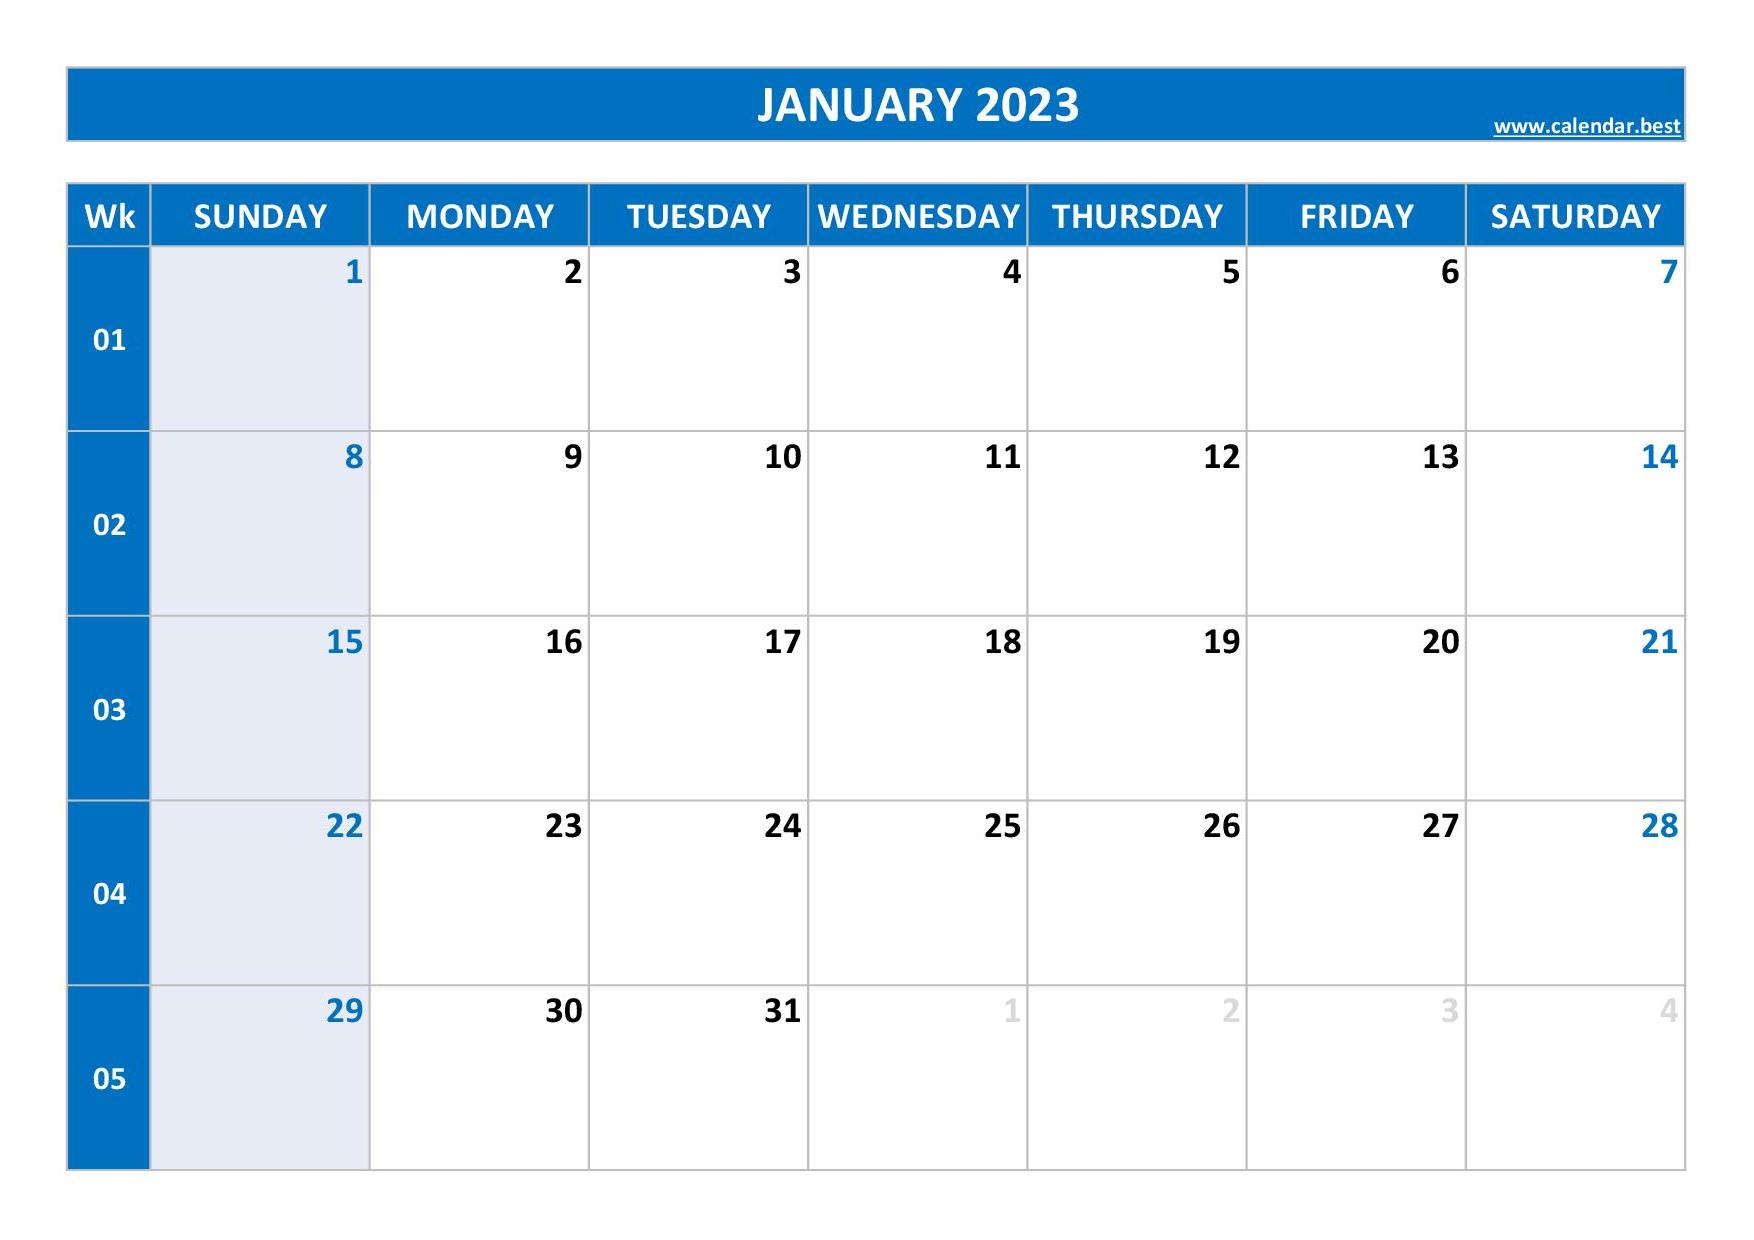 january-2023-calendar-calendar-best